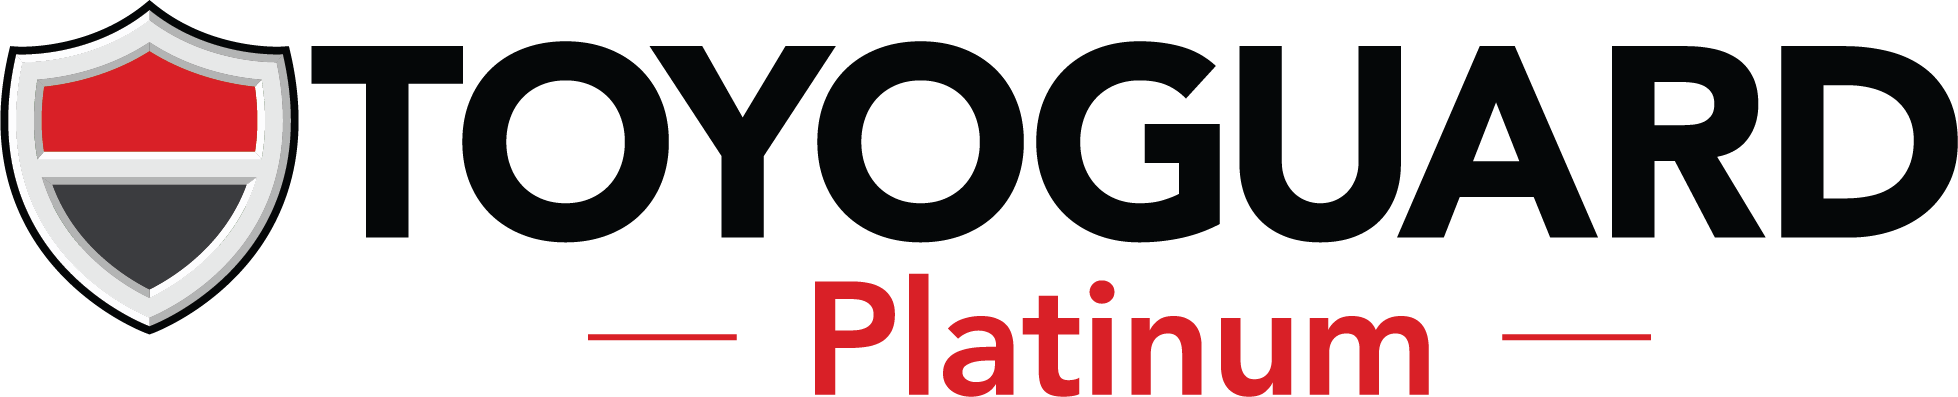 Toyoguard Platinum black logo